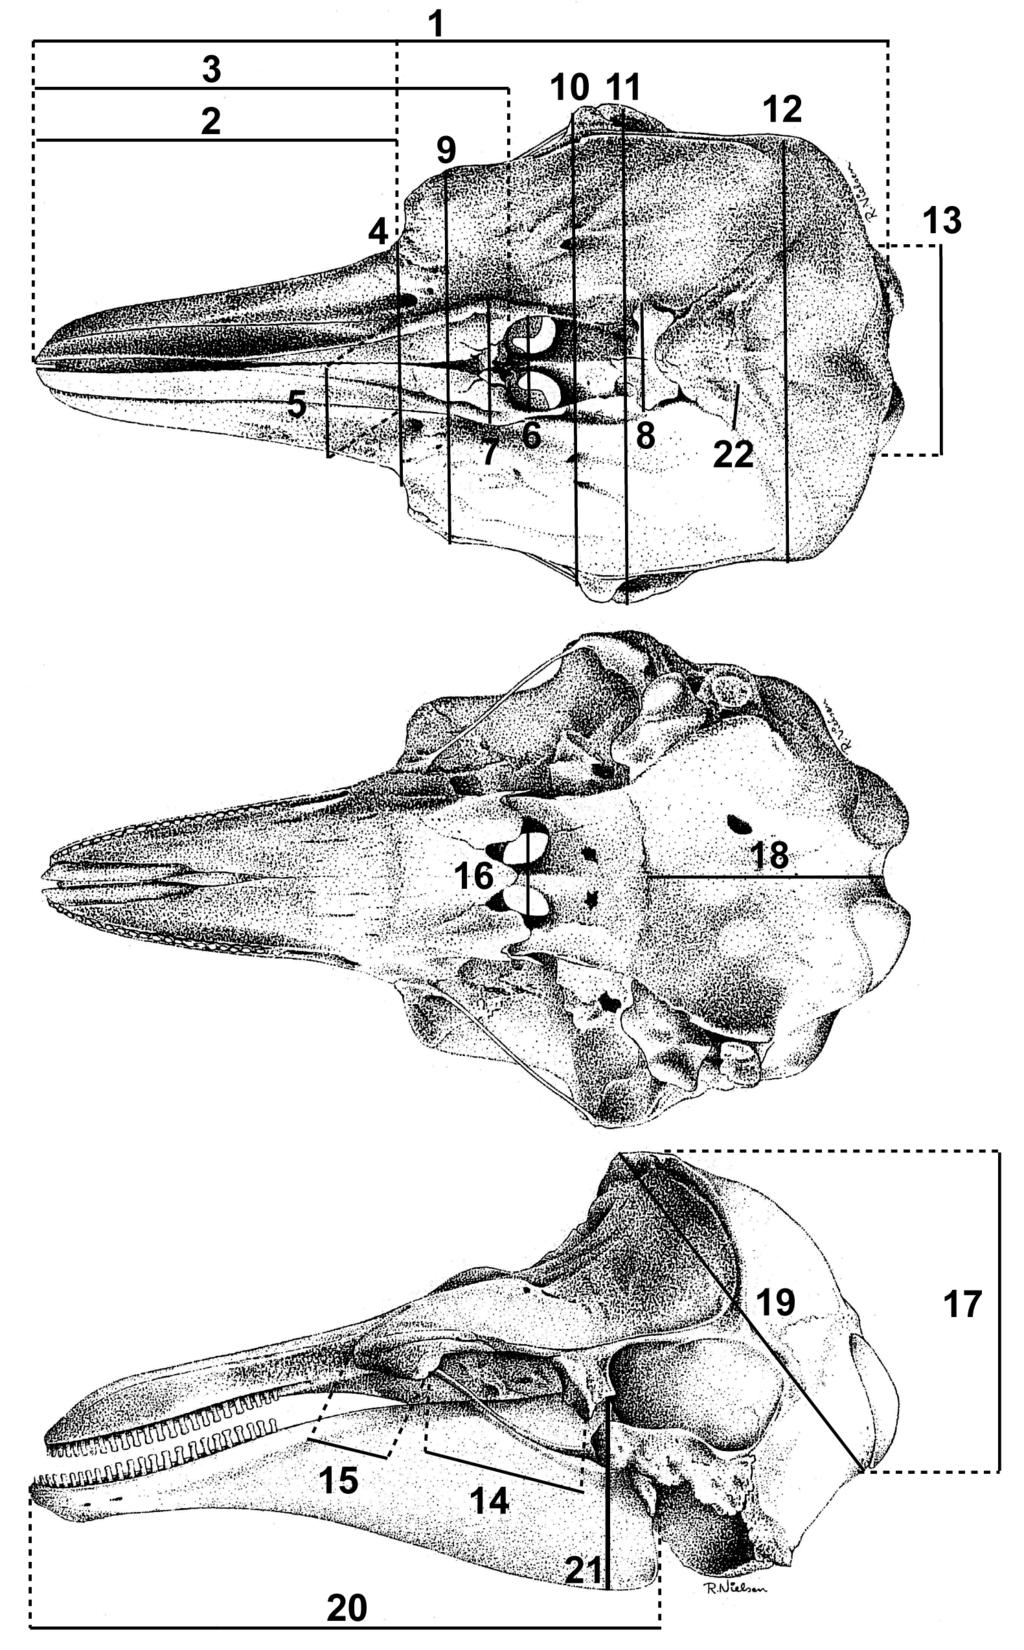 Appendix 2. Phocoena phocoena. Diagram showing the 22 skull measurements sampled in this study.